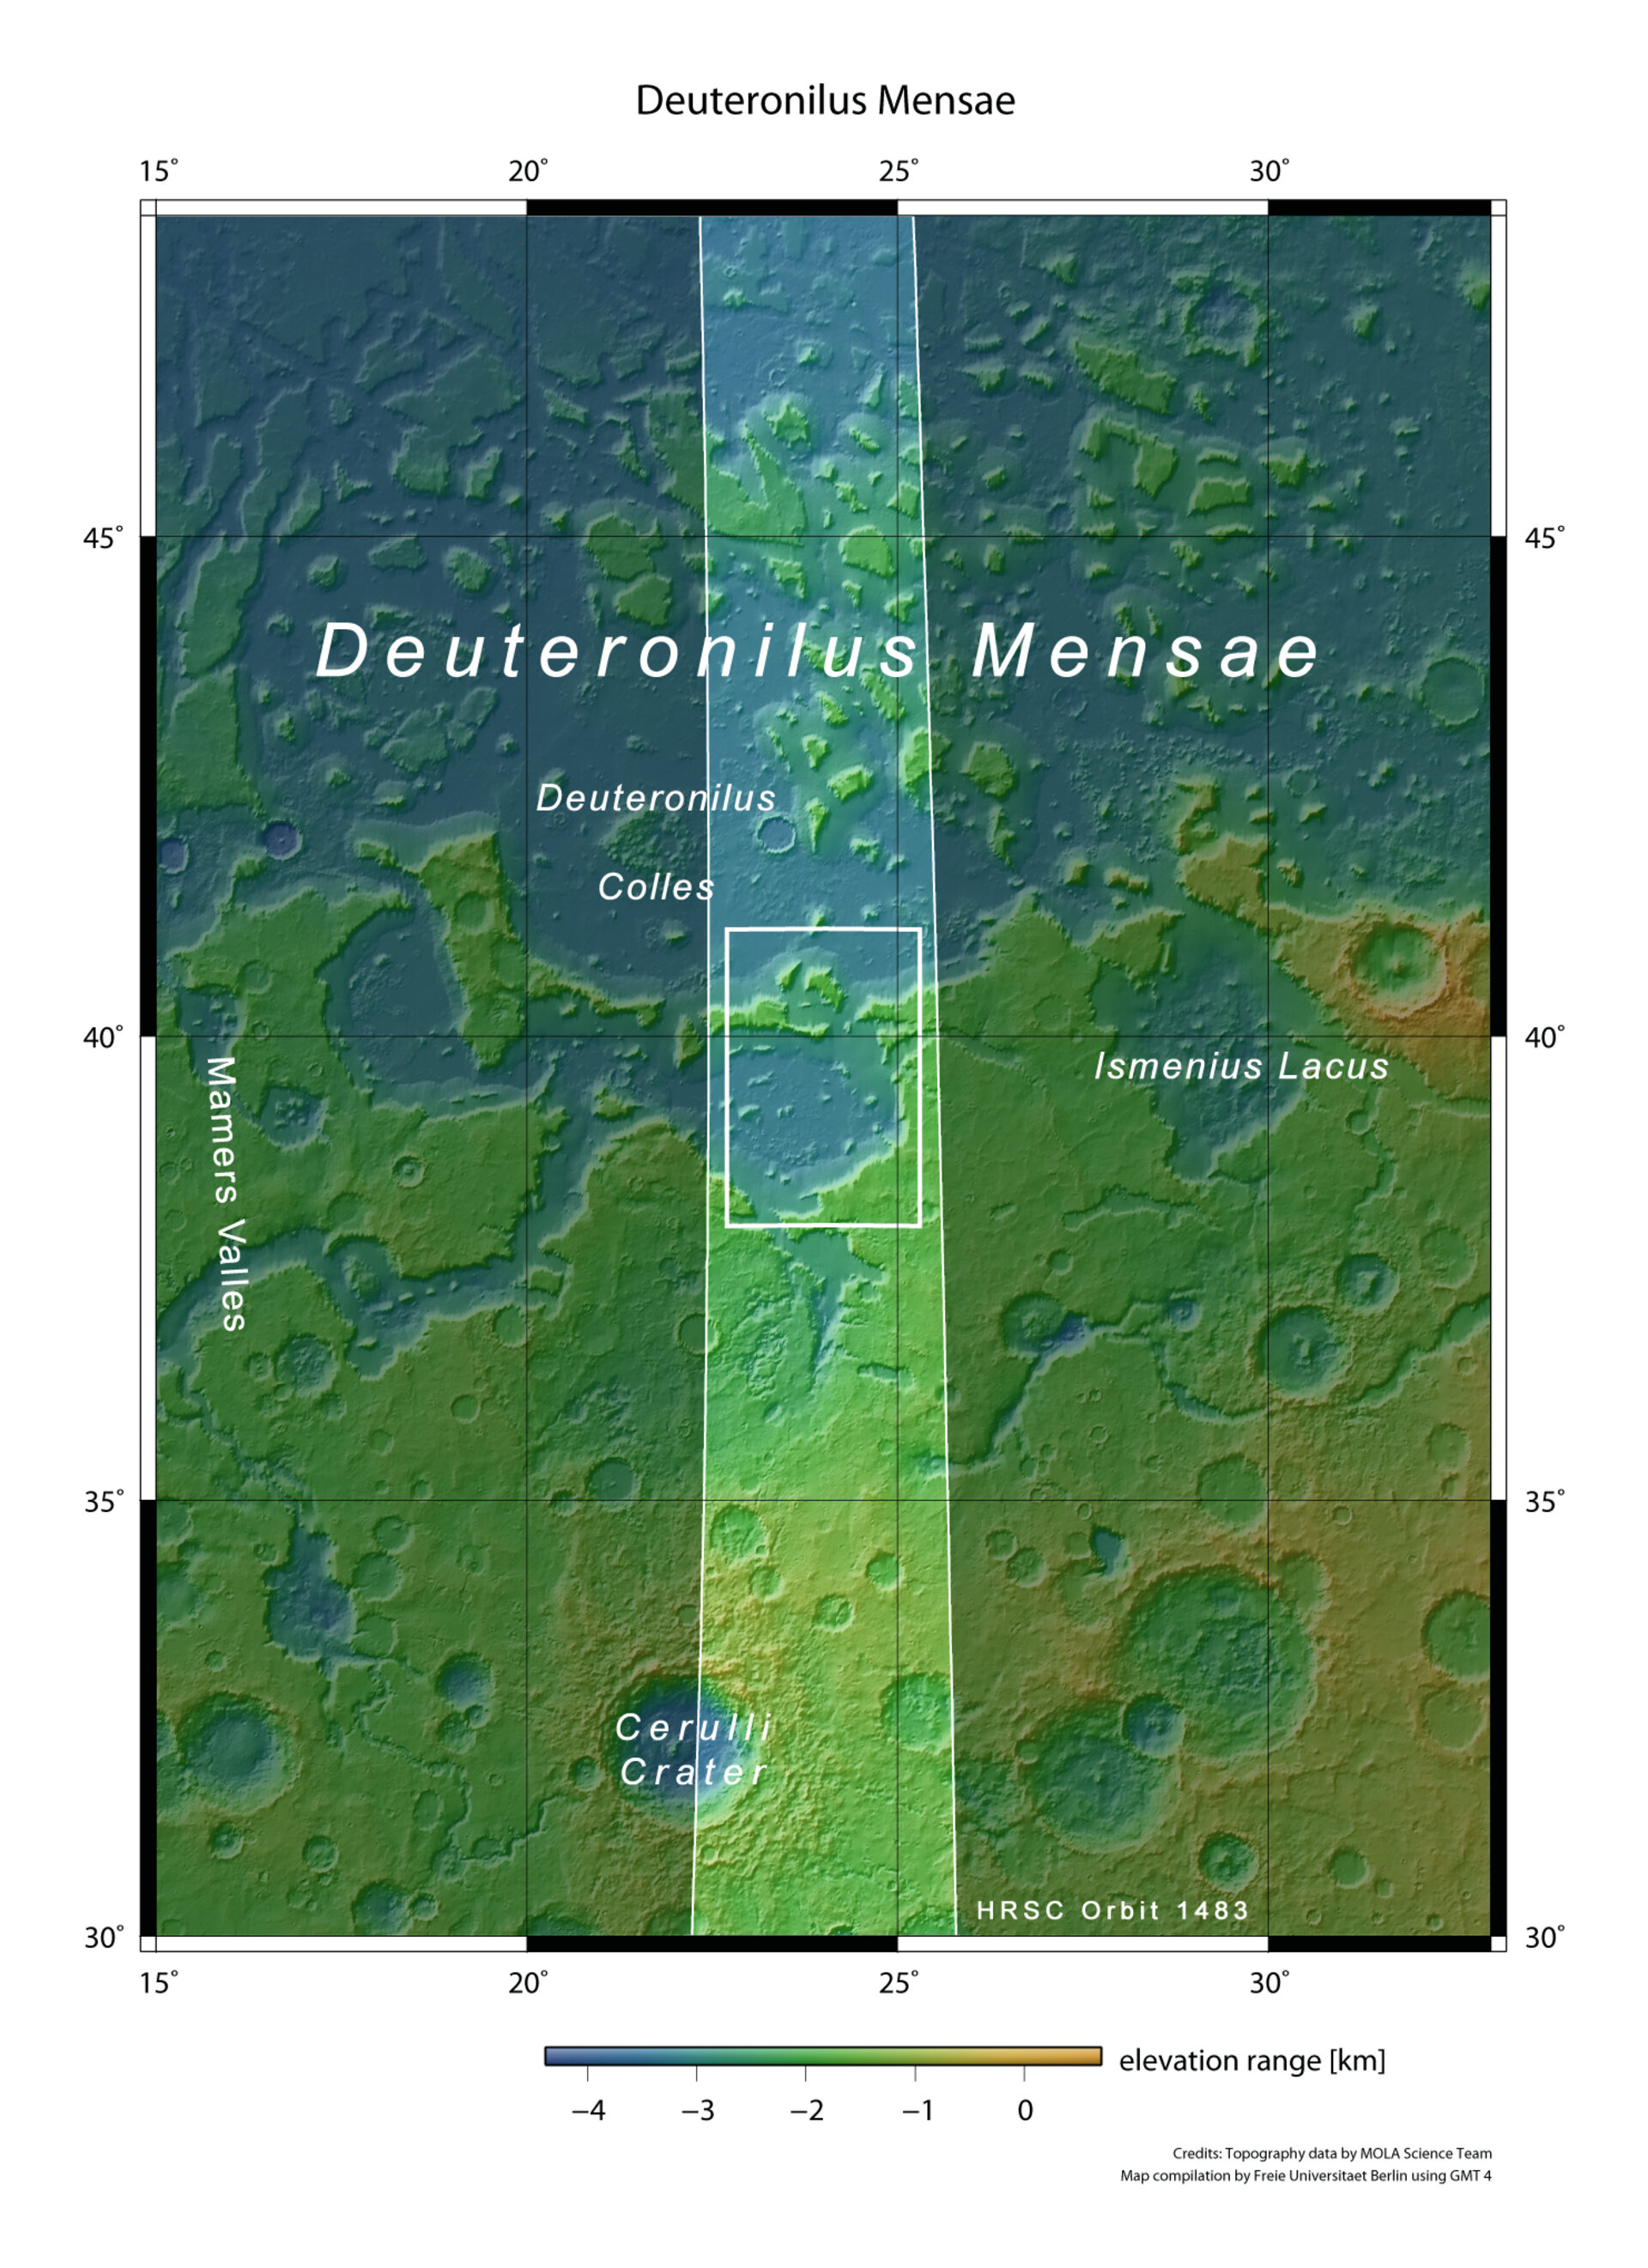 Deuteronilus Mensae seen in context